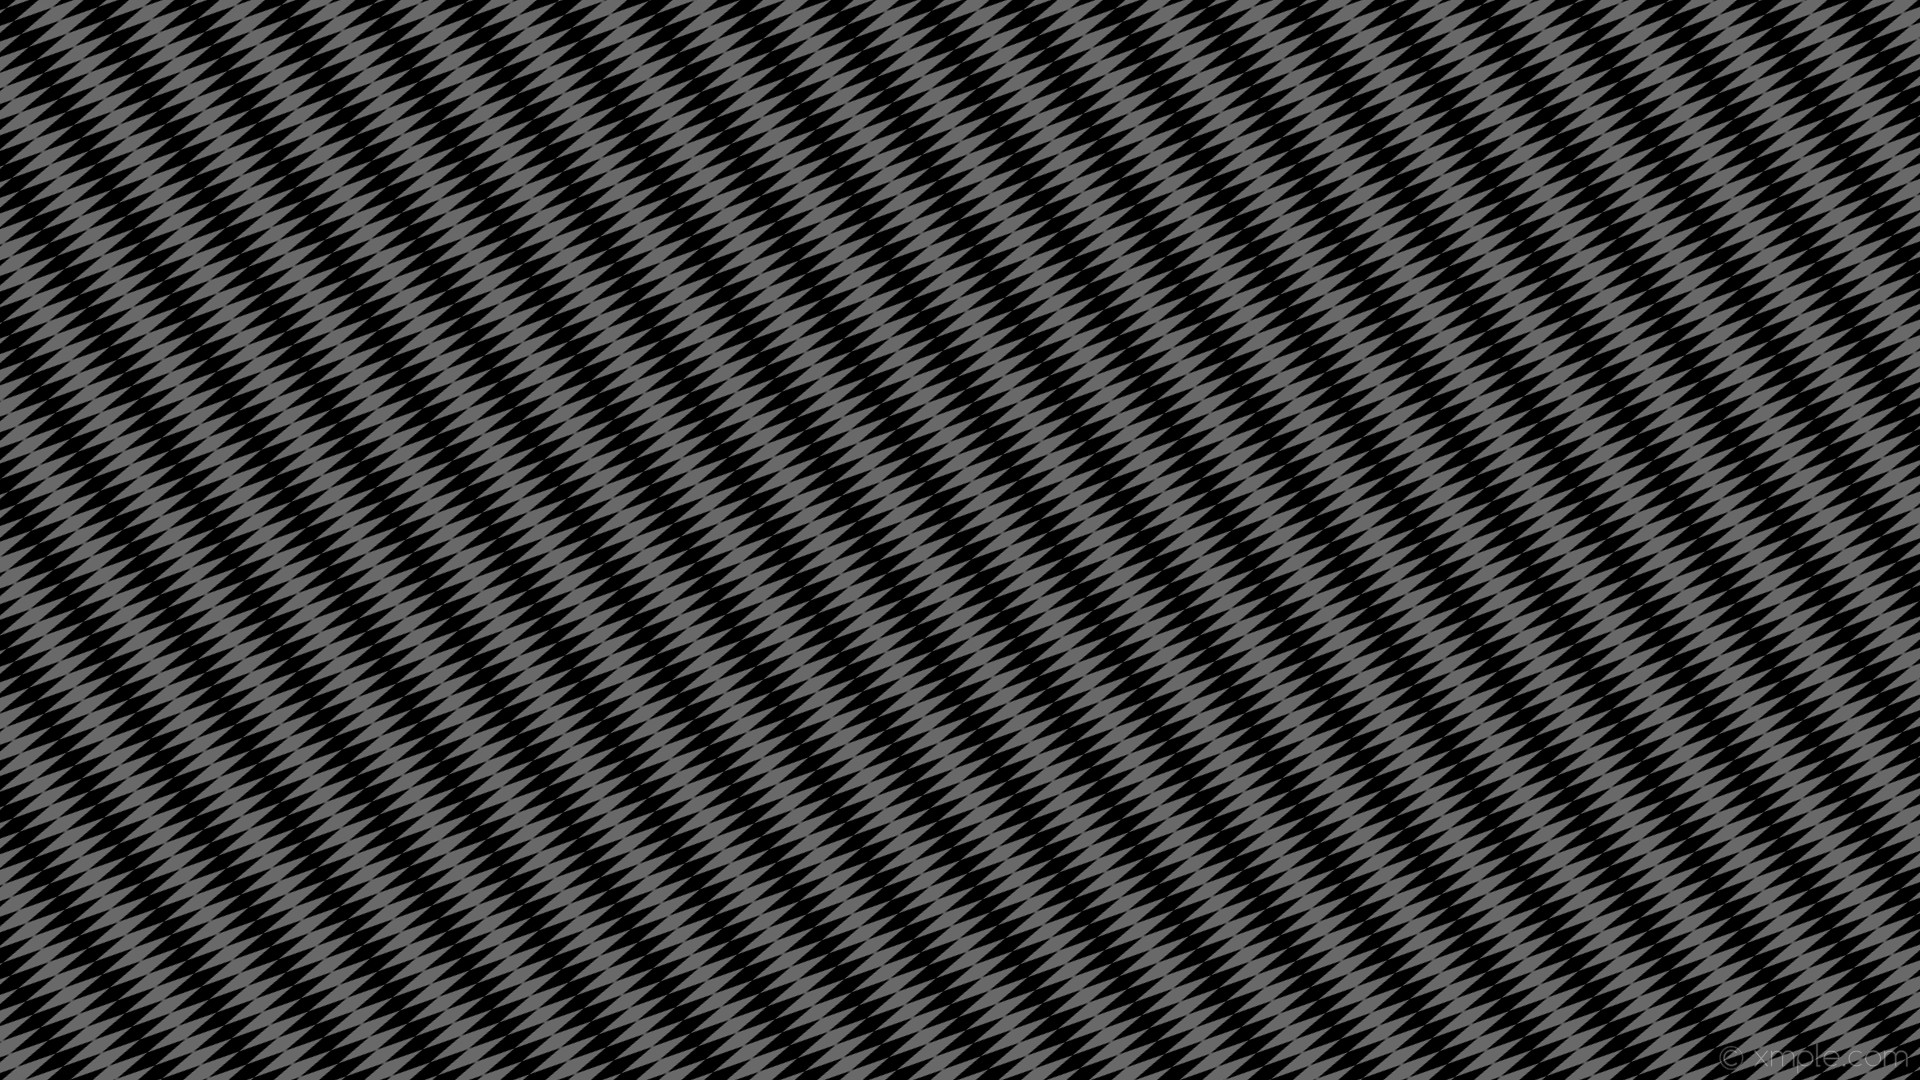 1920x1080 wallpaper rhombus black grey diamond lozenge dim gray #000000 #696969 30Â°  80px 15px